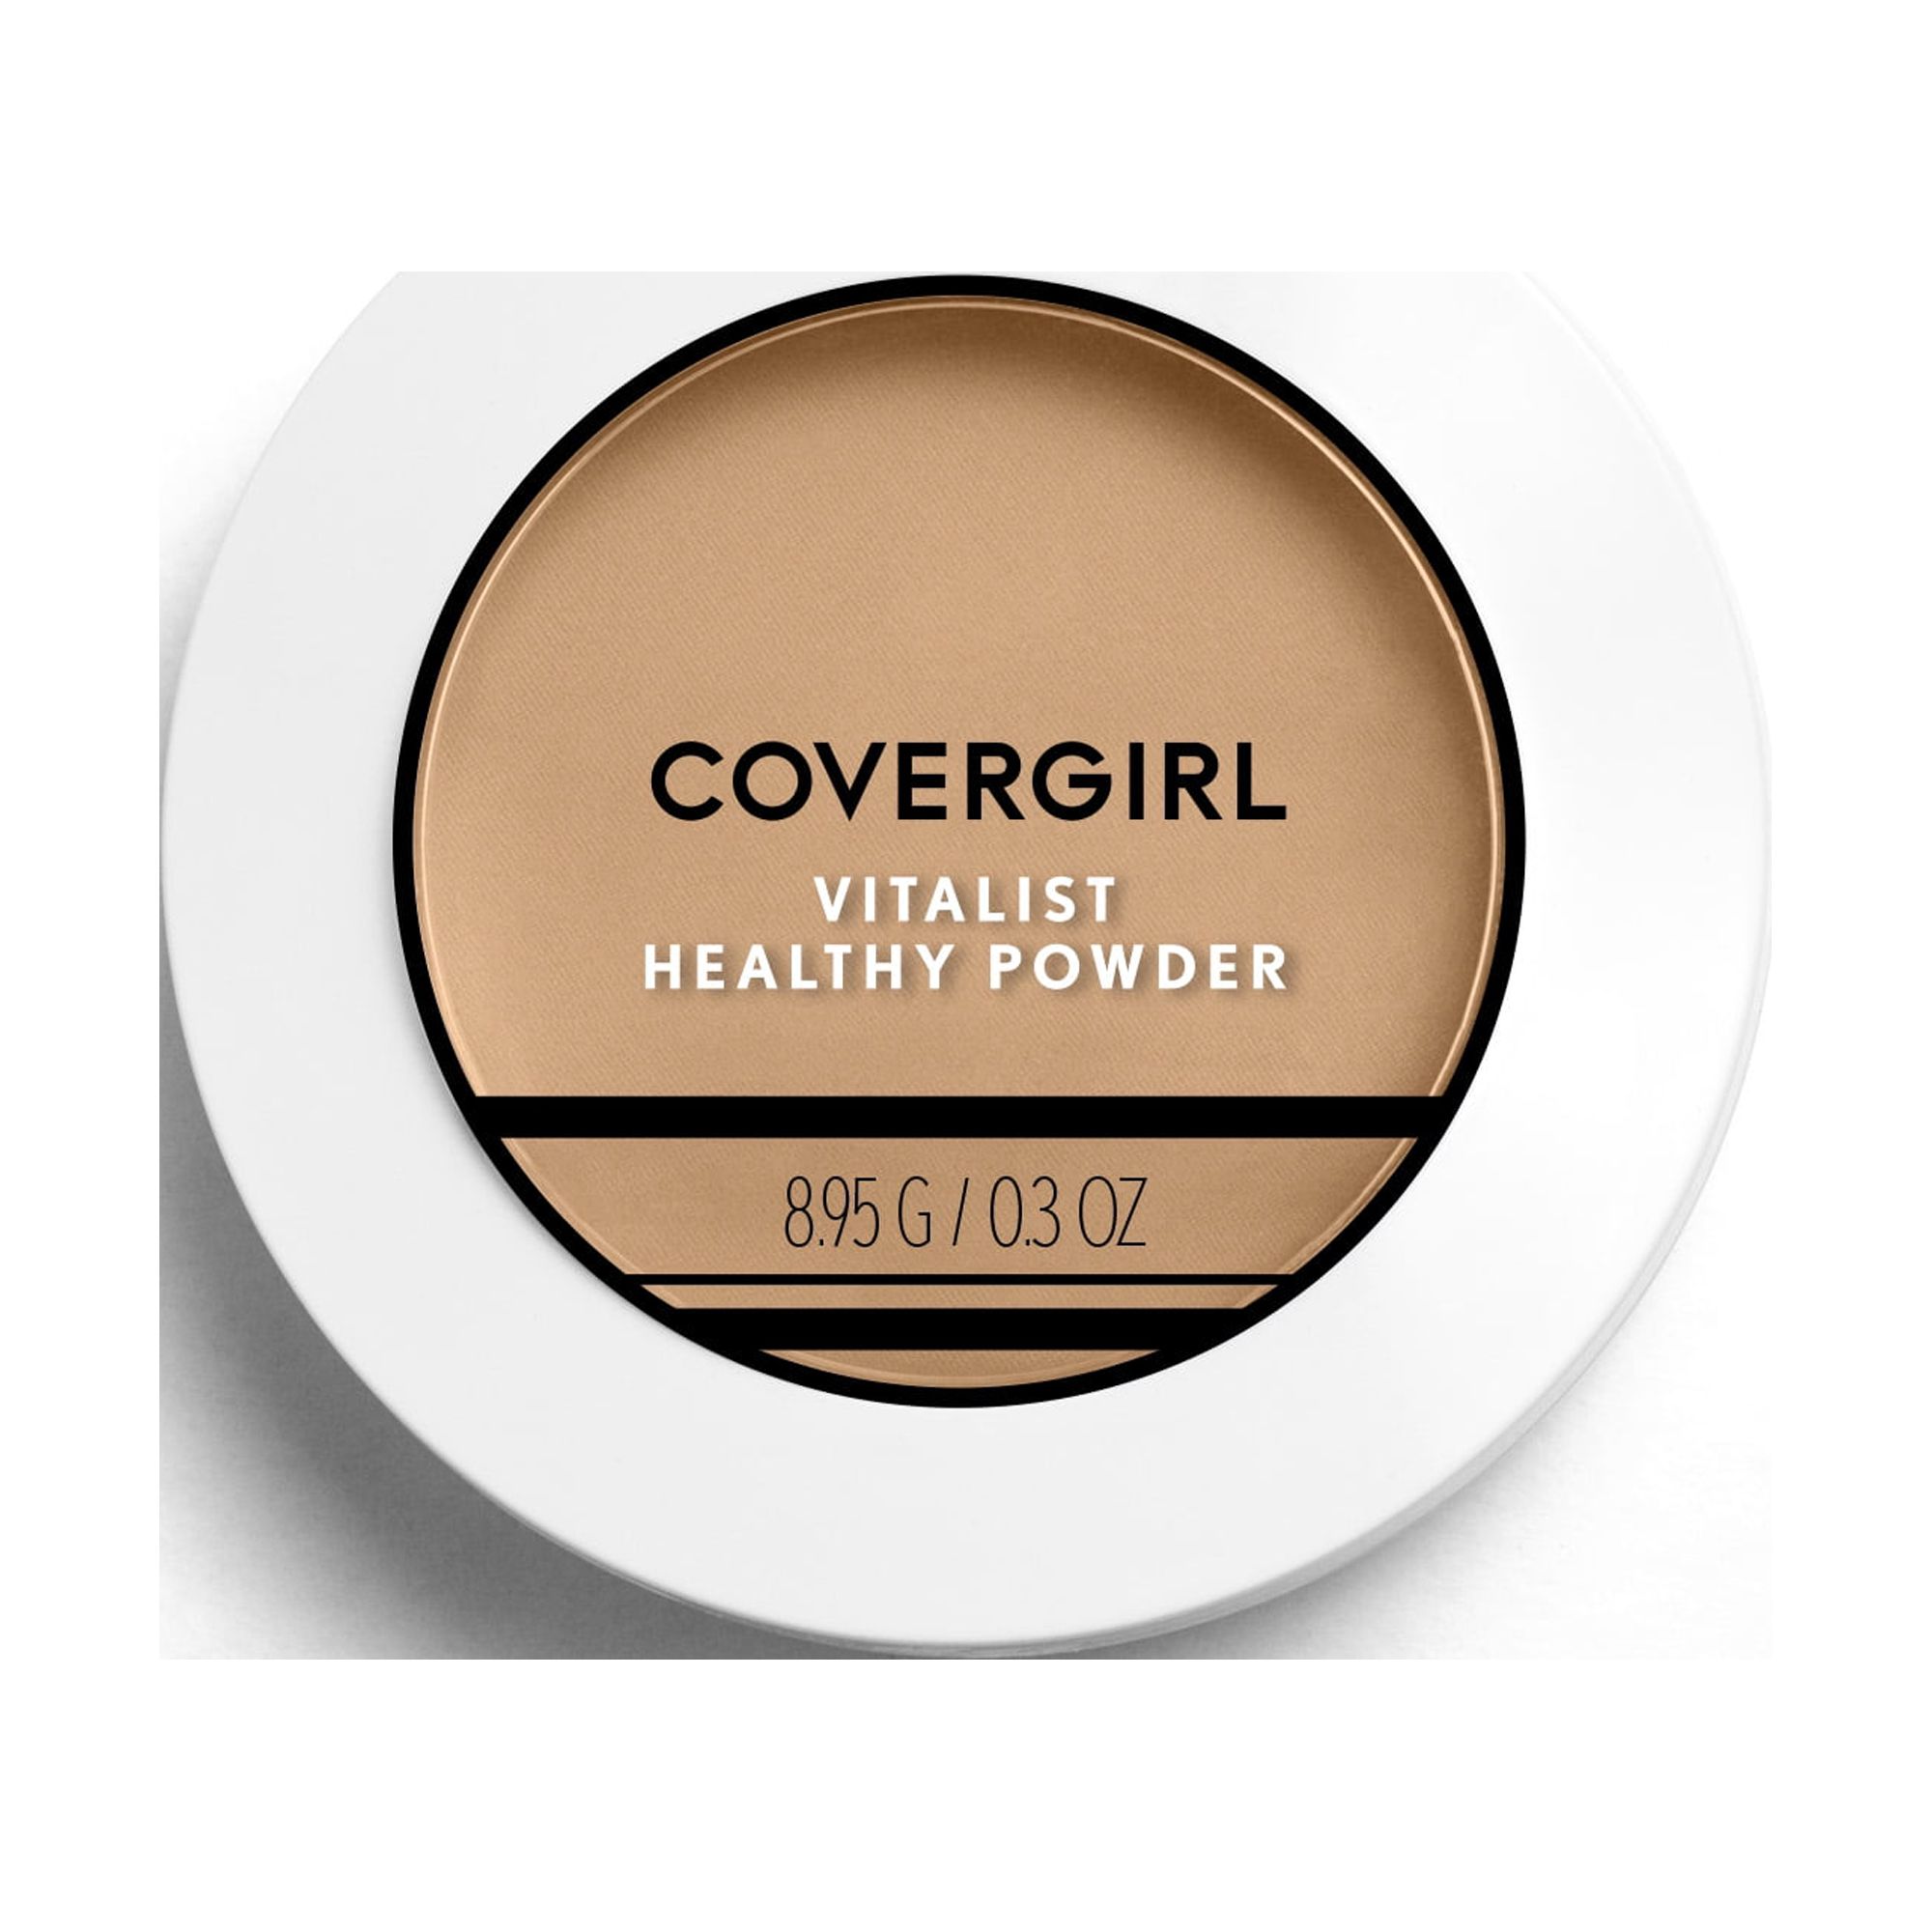 COVERGIRL Vitalist Healthy Powder, 745 Warm Beige - image 1 of 3